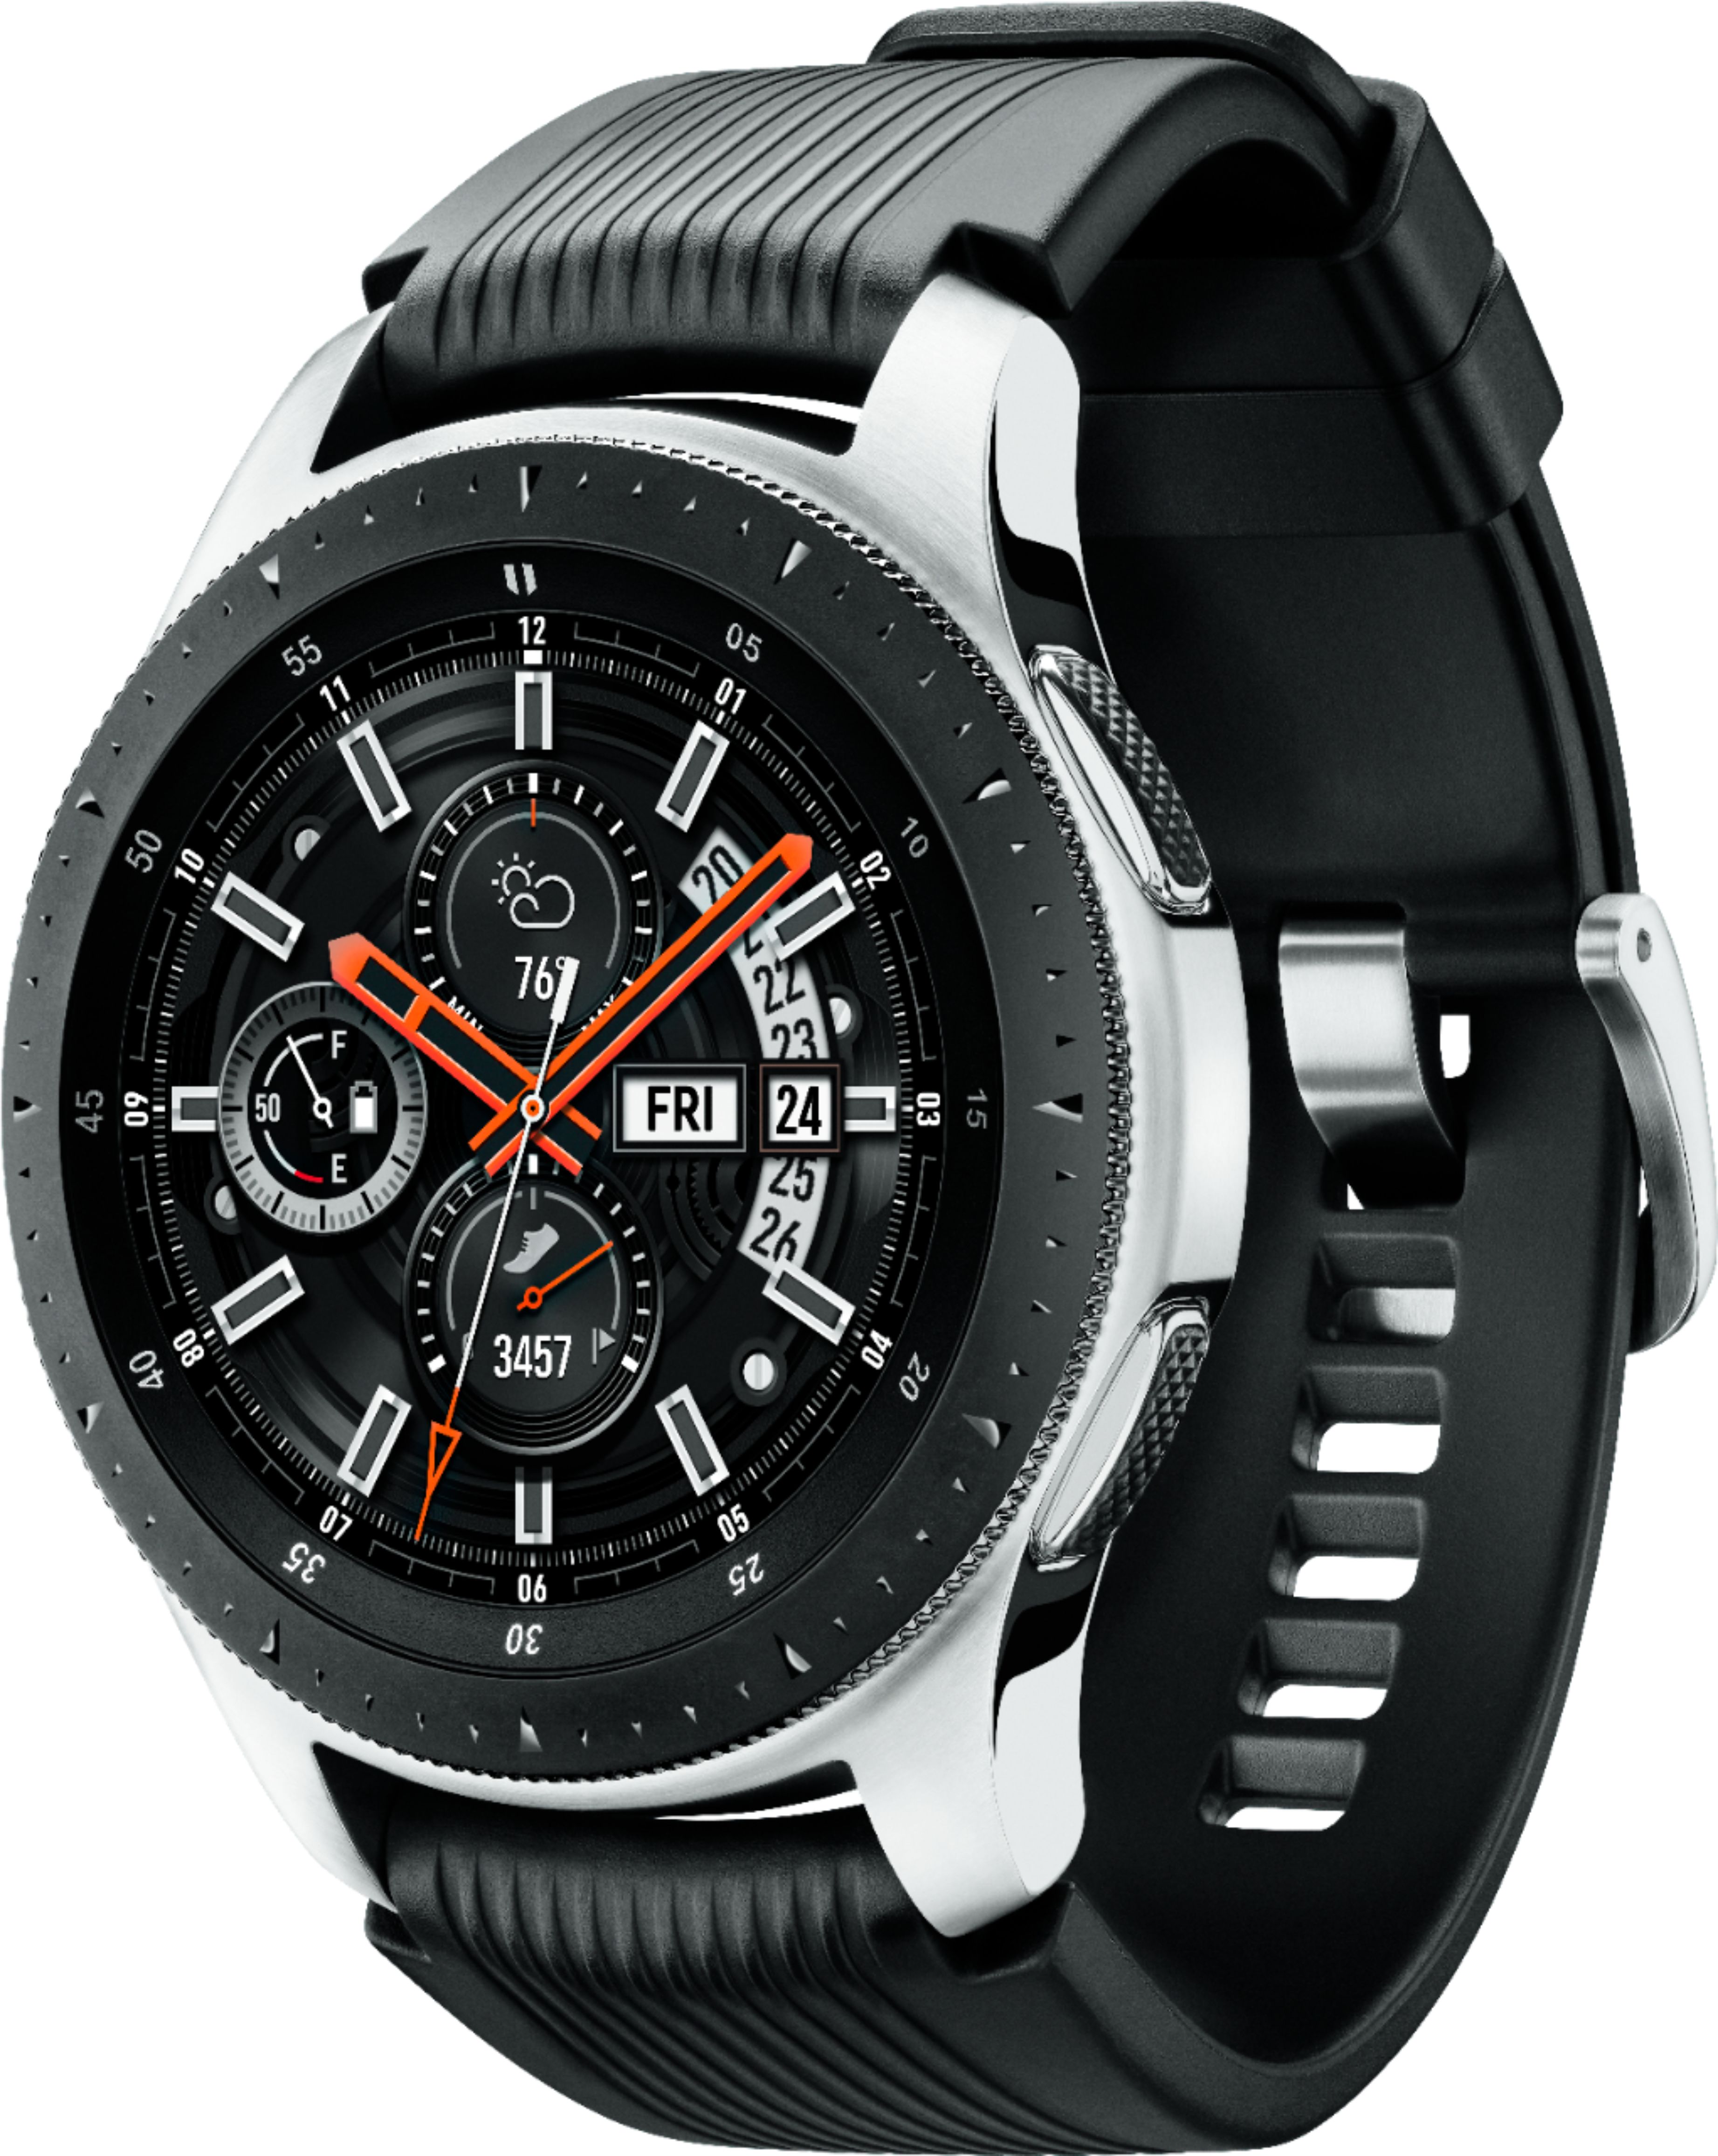 Left View: Samsung - Galaxy Watch Smartwatch 46mm Stainless Steel LTE (unlocked) - Silver